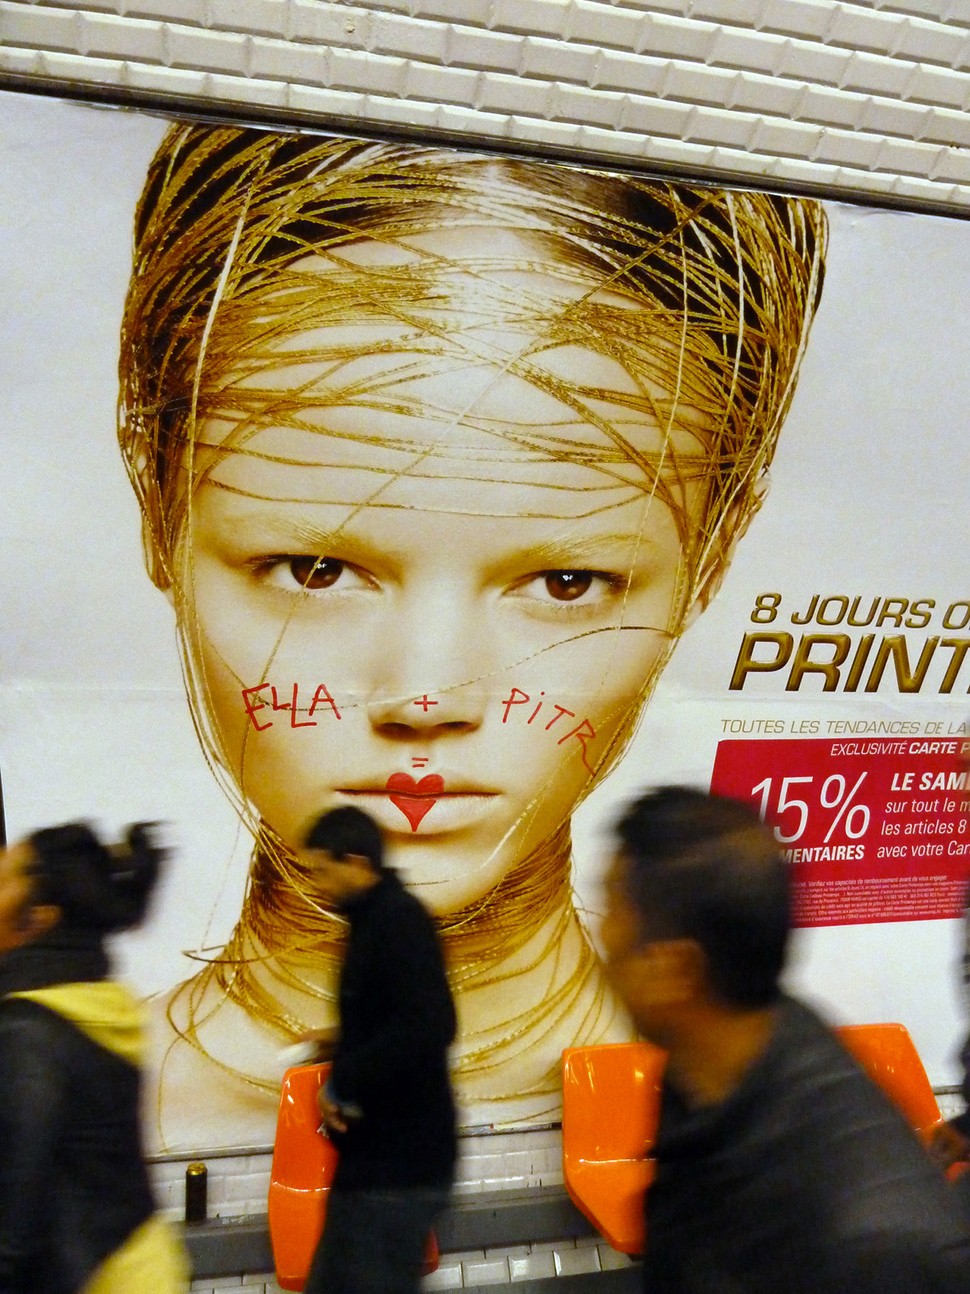 Ella-&-Pitr-paris-metro-graffiti-street-art-ubrain-les-papiers-peintres-france-2014_1-web